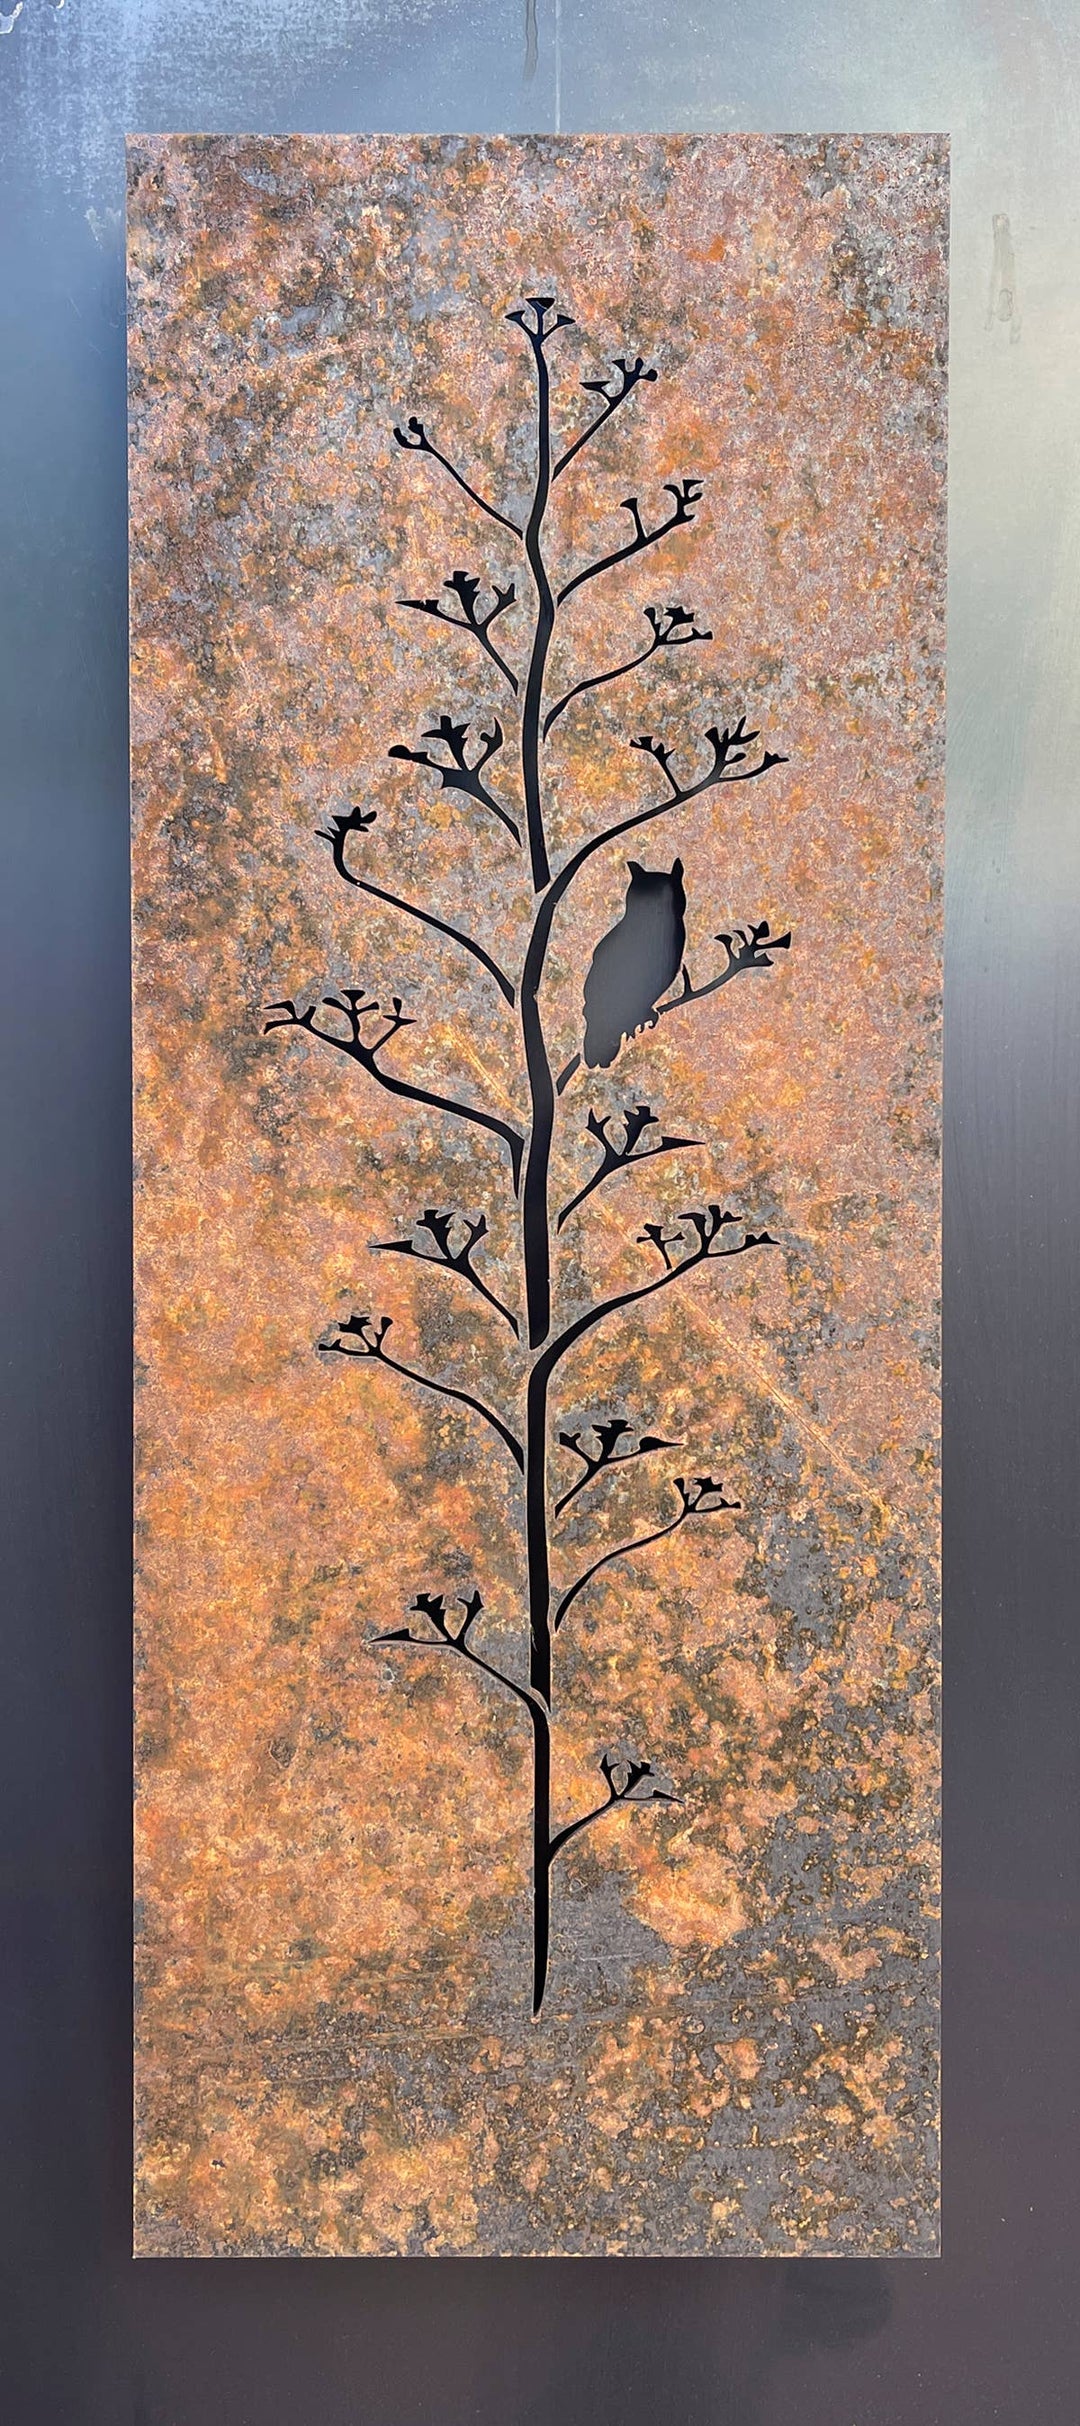 Owl: Oxidized steel botanical